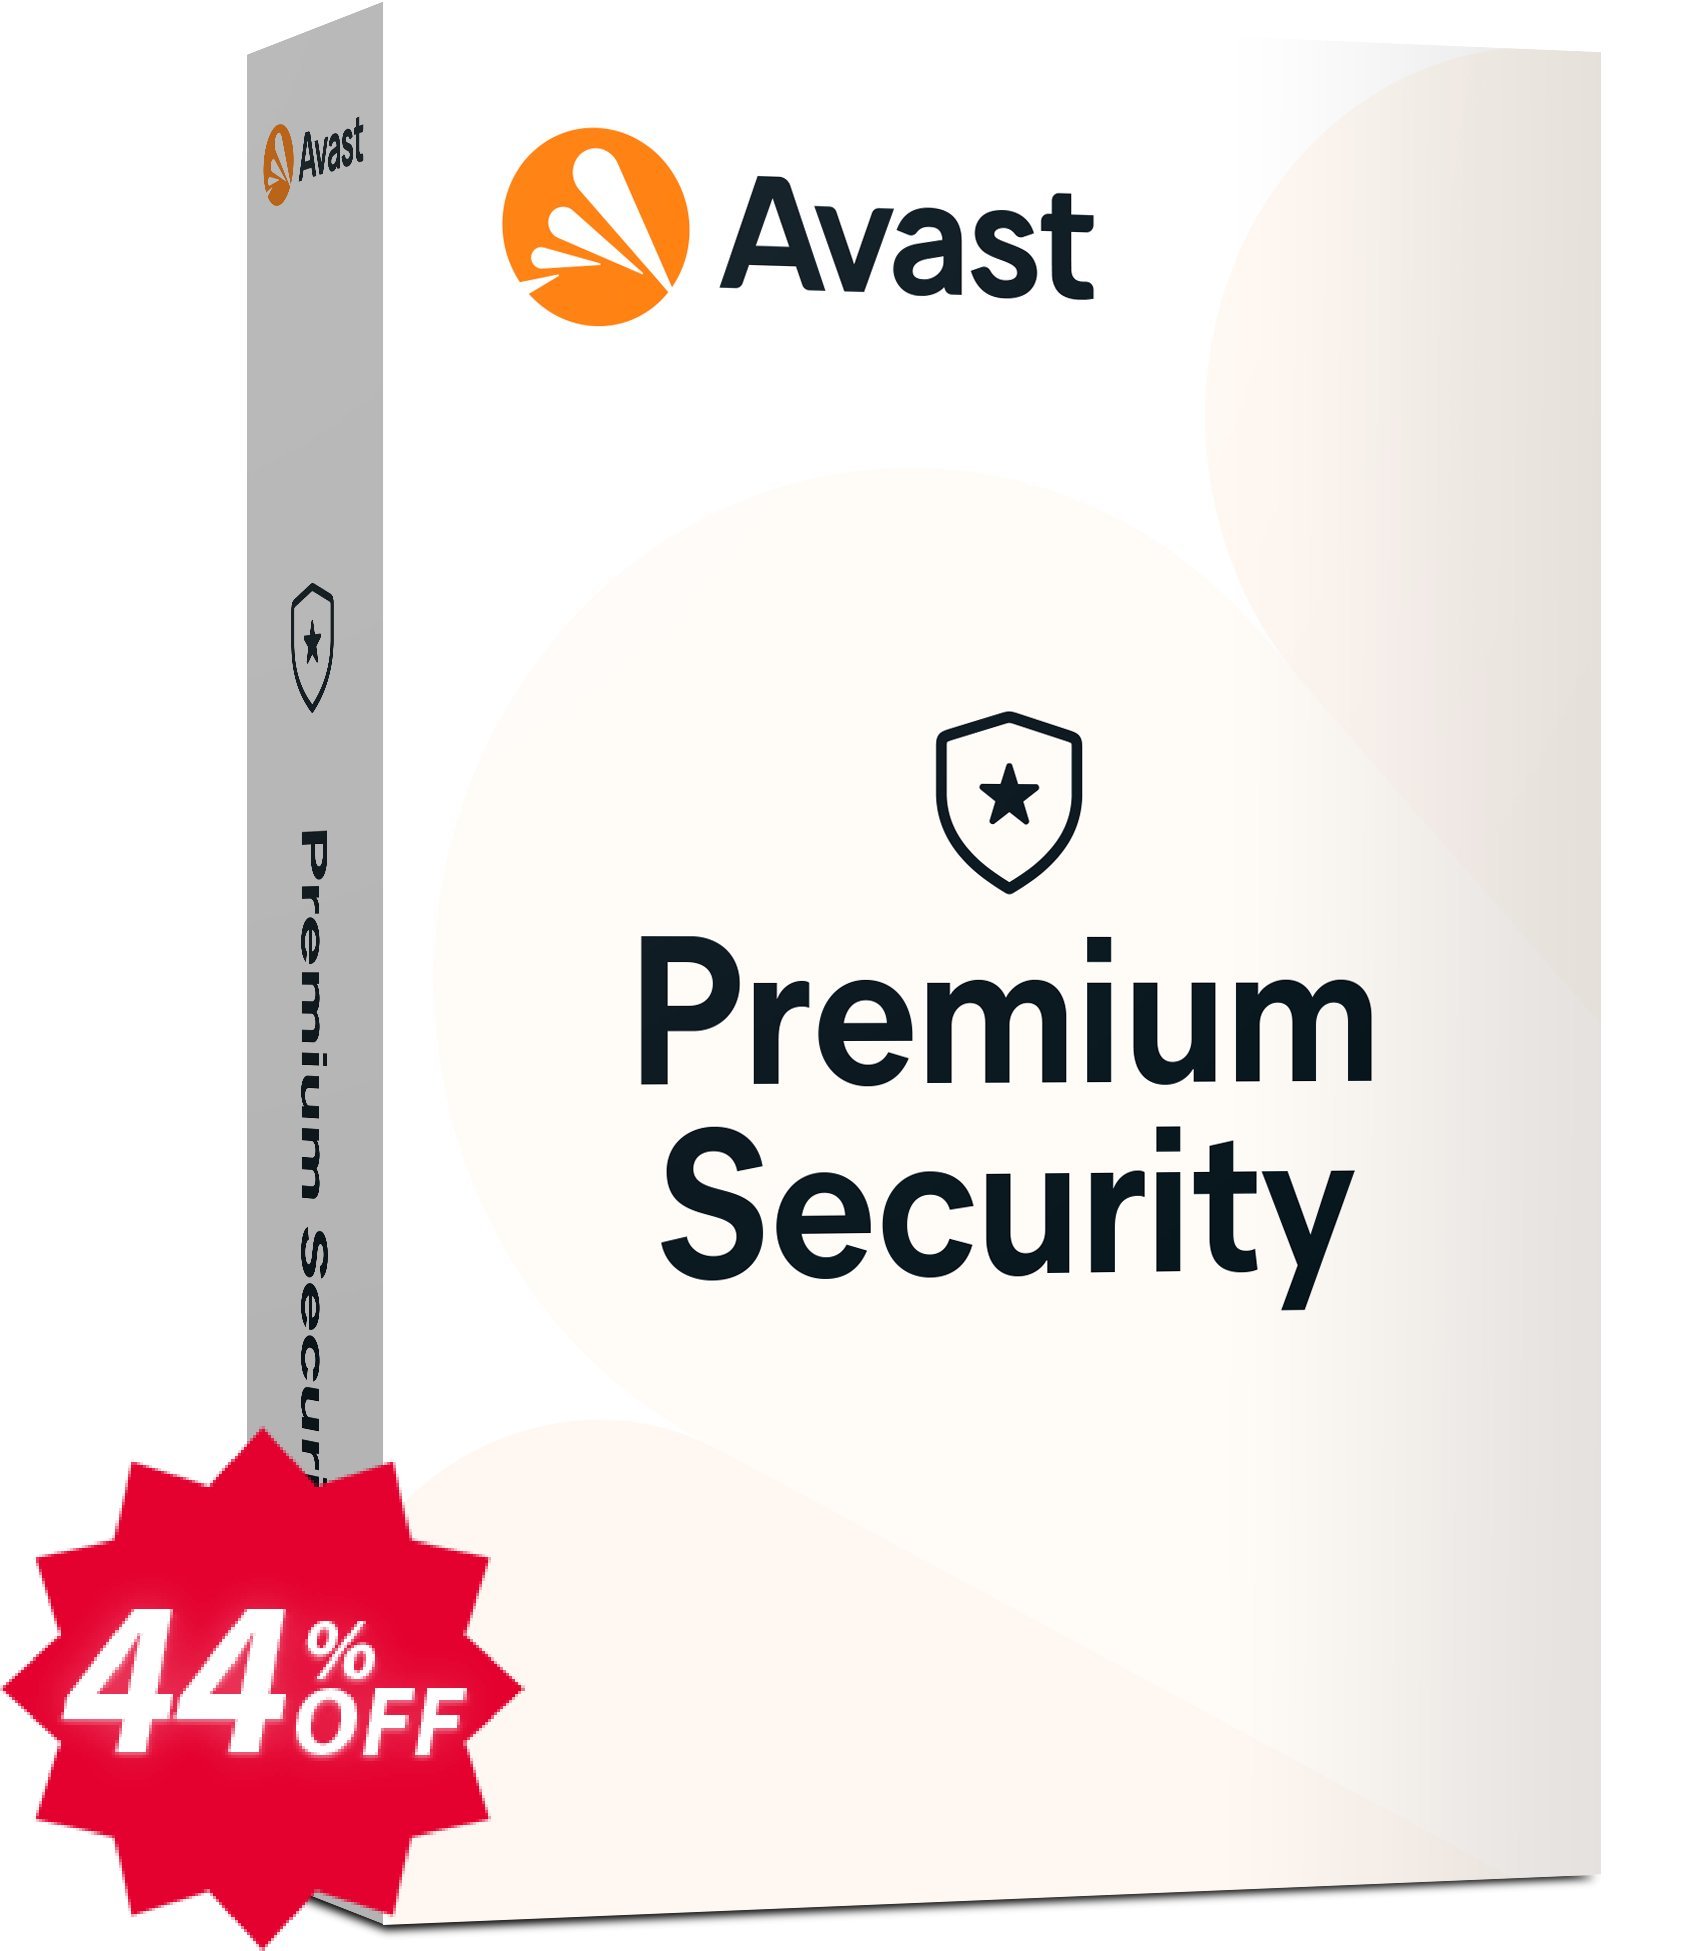 Avast Premium Security Coupon code 44% discount 